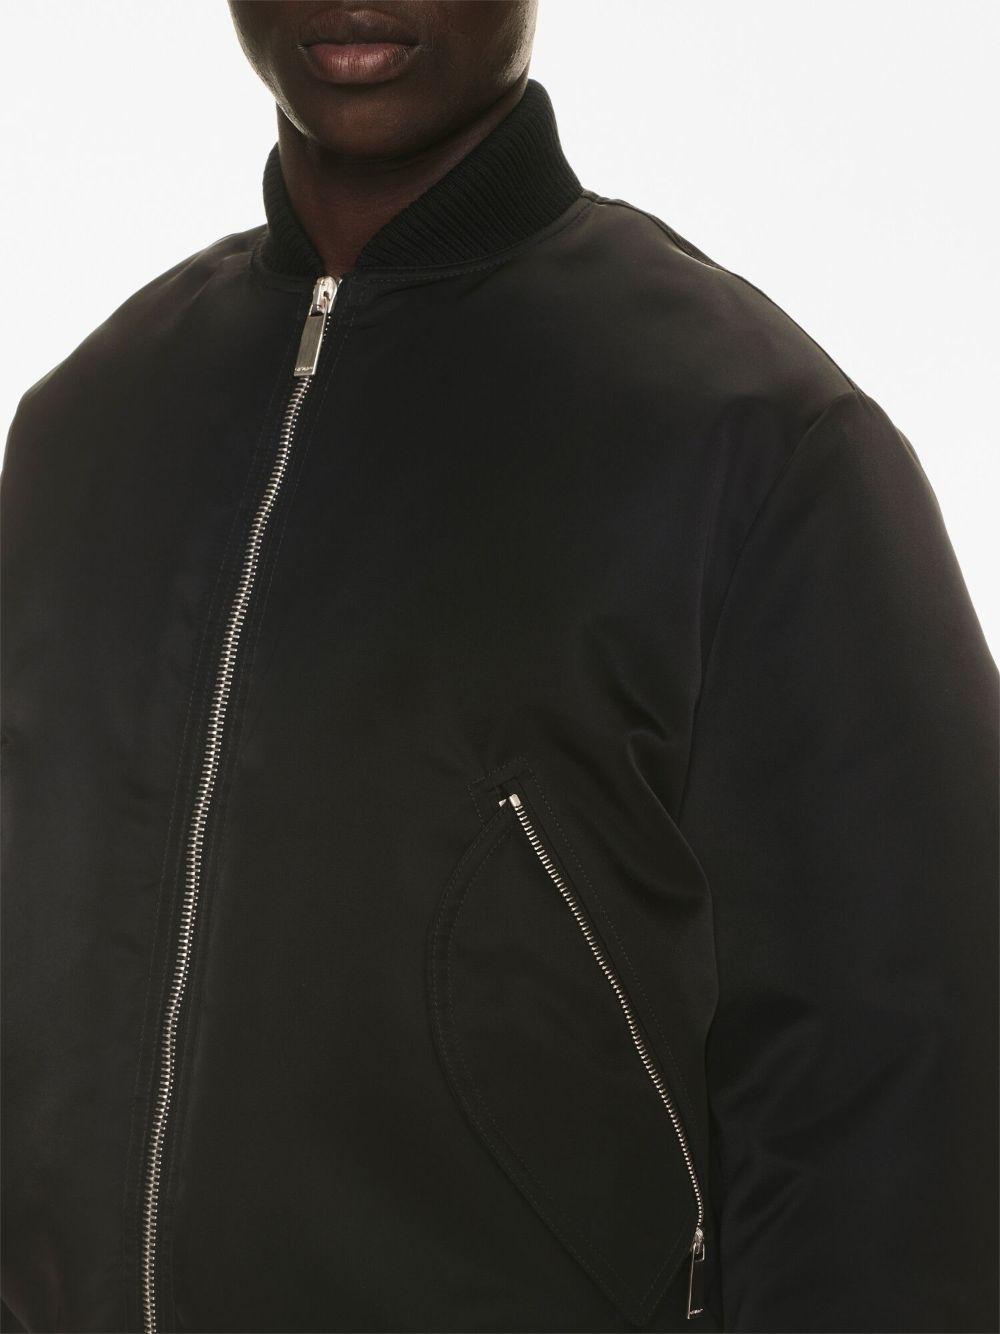 Off-White c/o Virgil Abloh Zip Over Lea Bomber Jacket in Black for